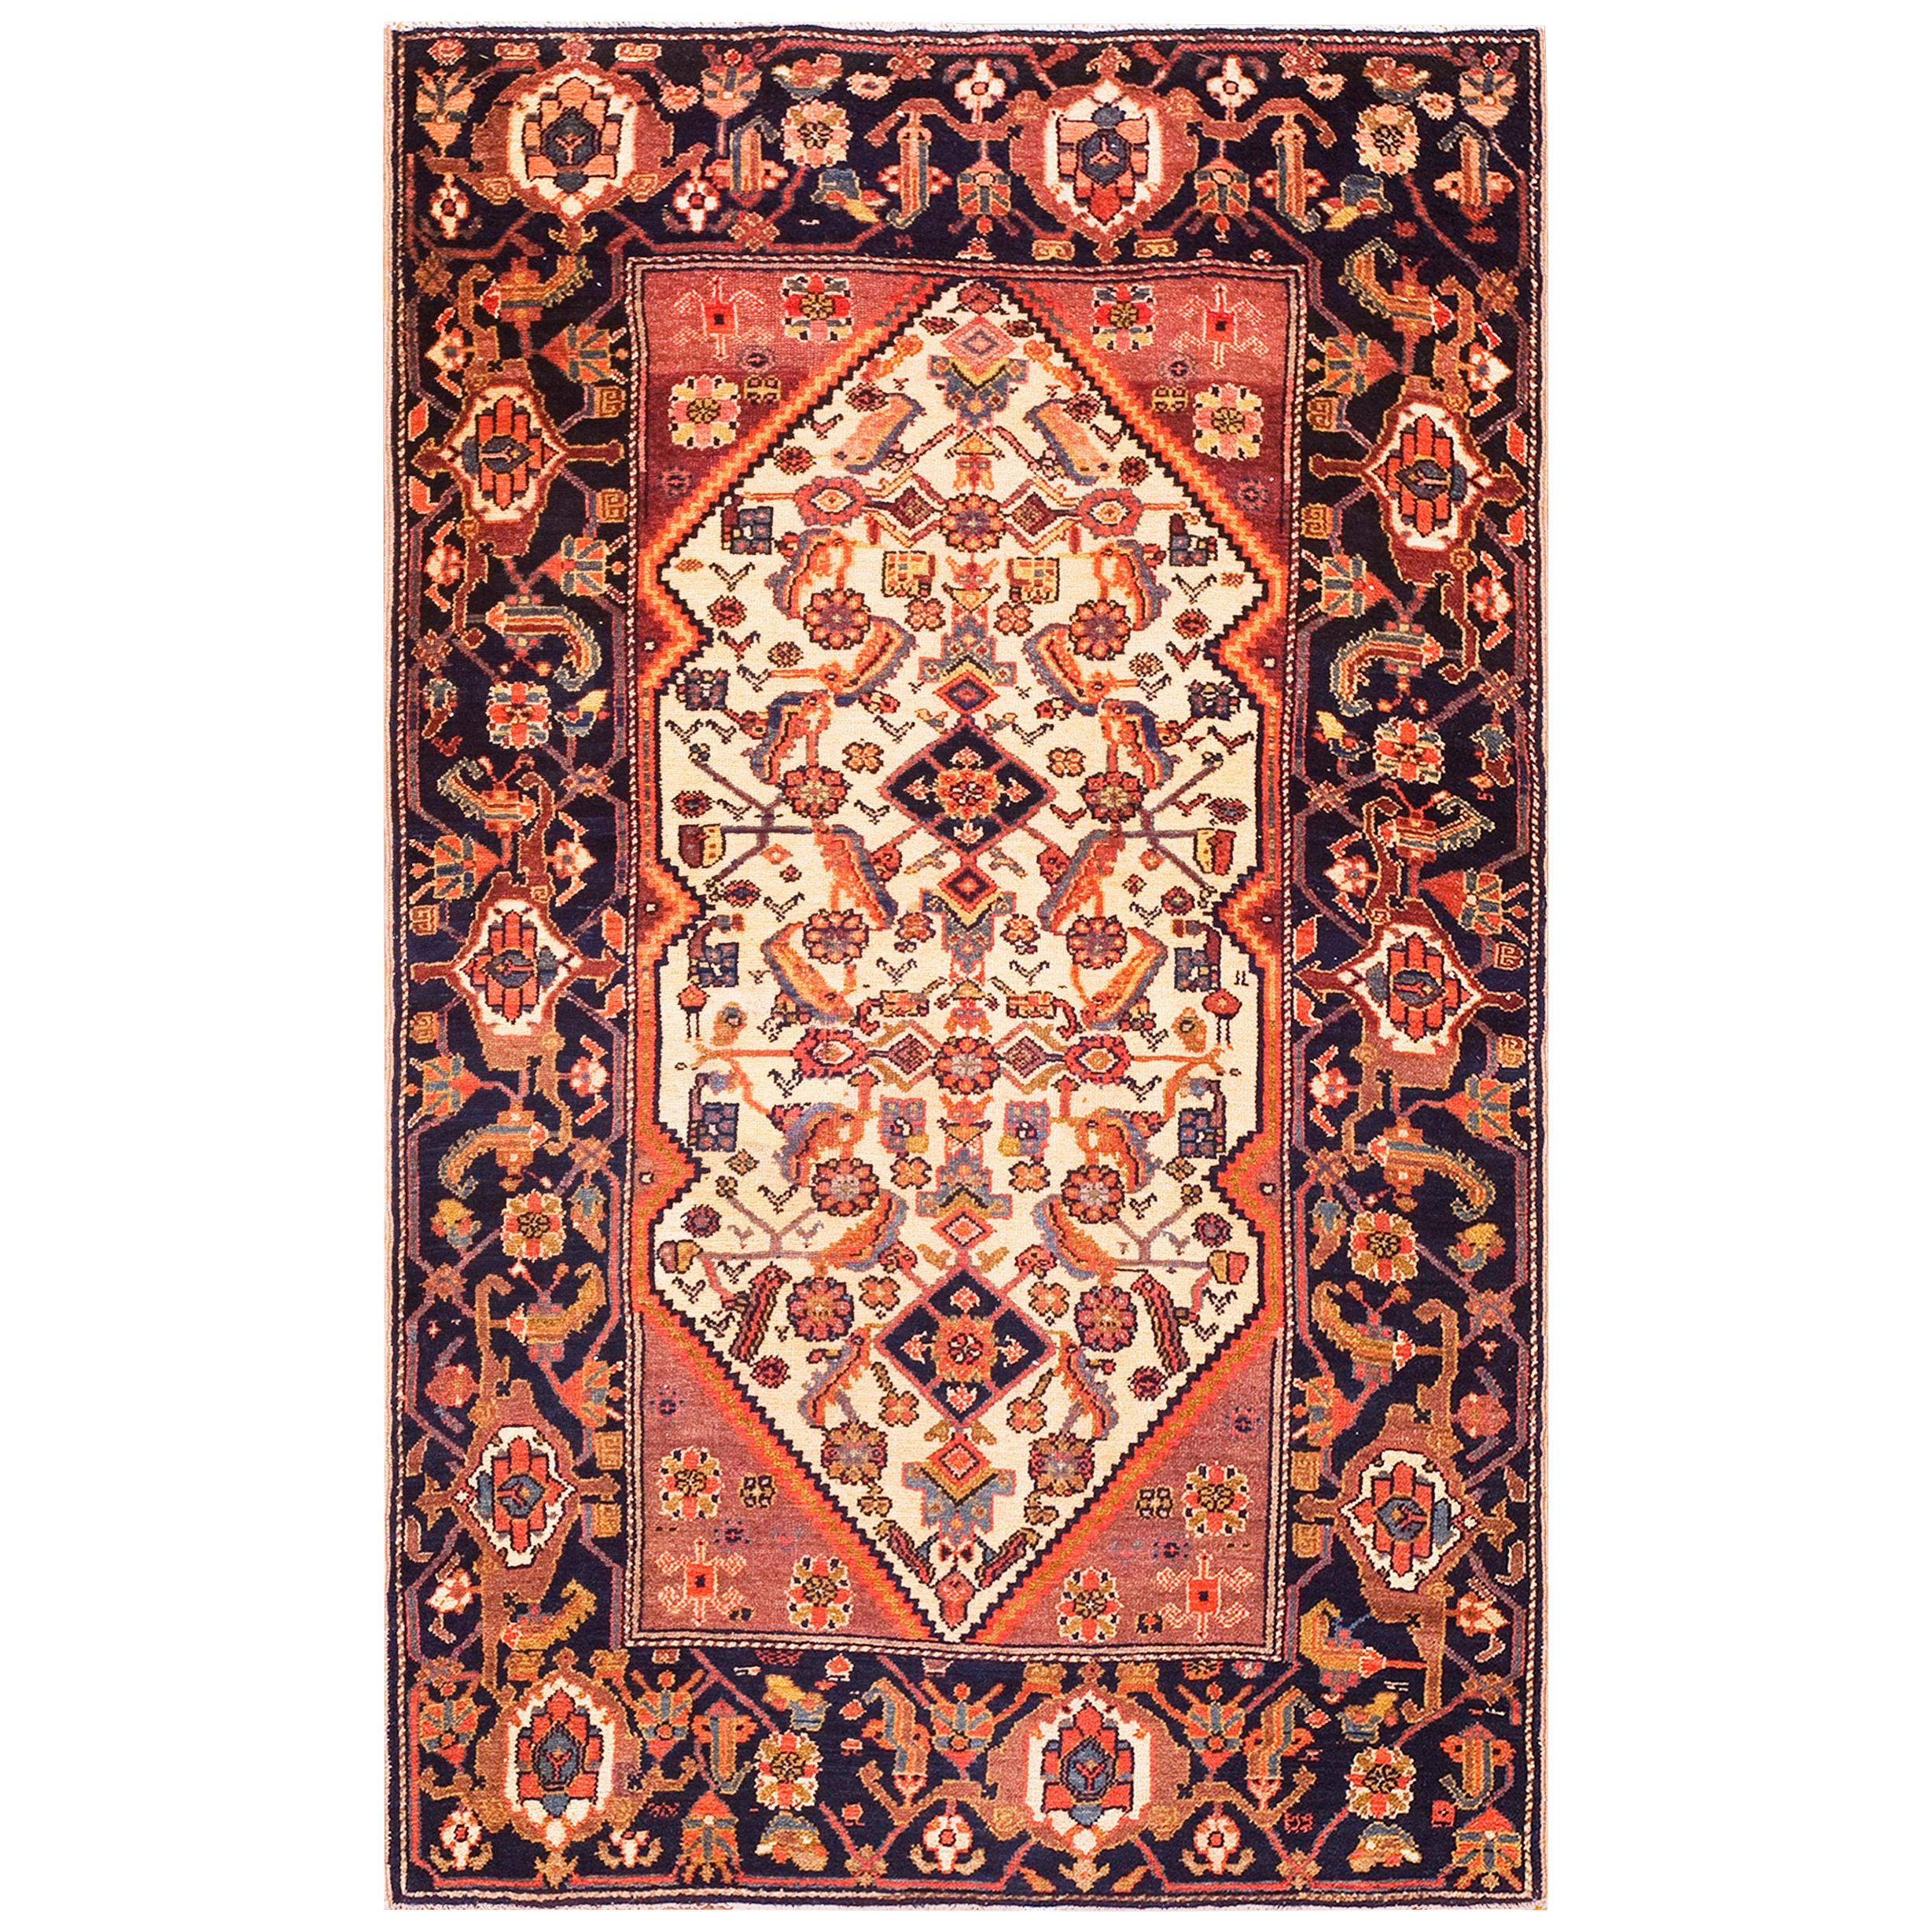 Late 19th Century  Persian Malayer Carpet ( 3'5" x 5'8" - 104 x 173 )